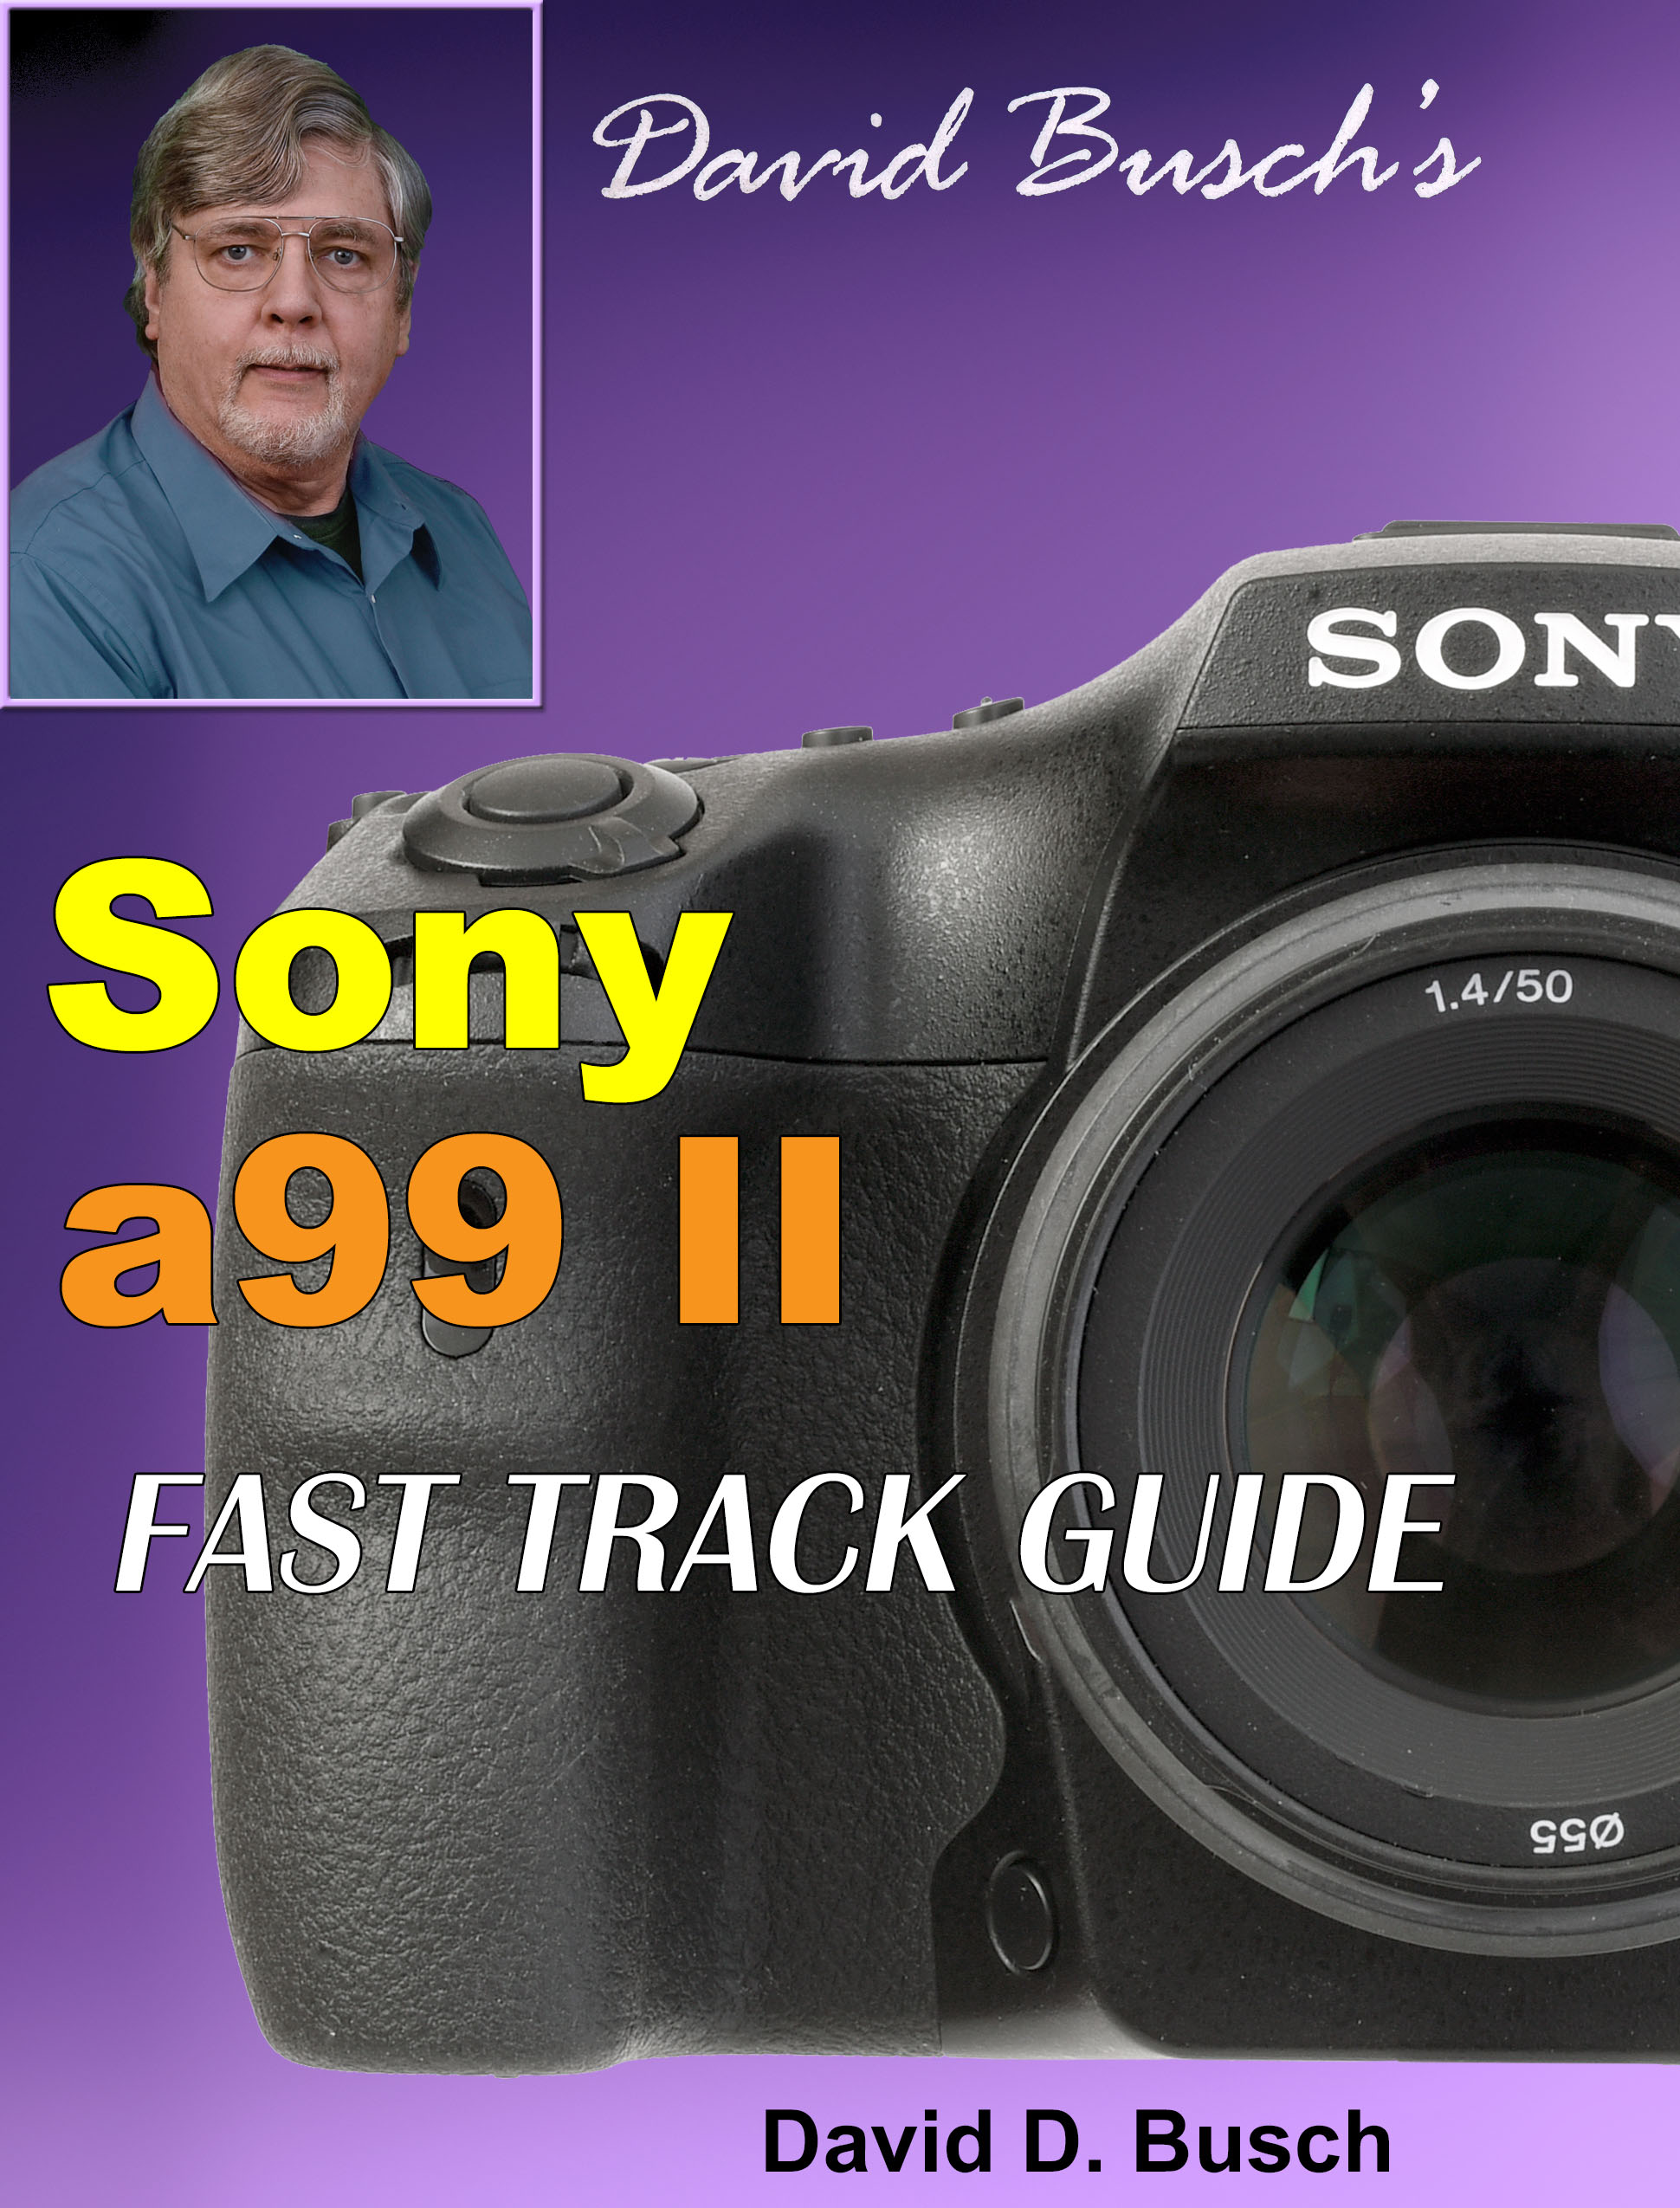 David Busch's Sony a99 II Fast Track Guide